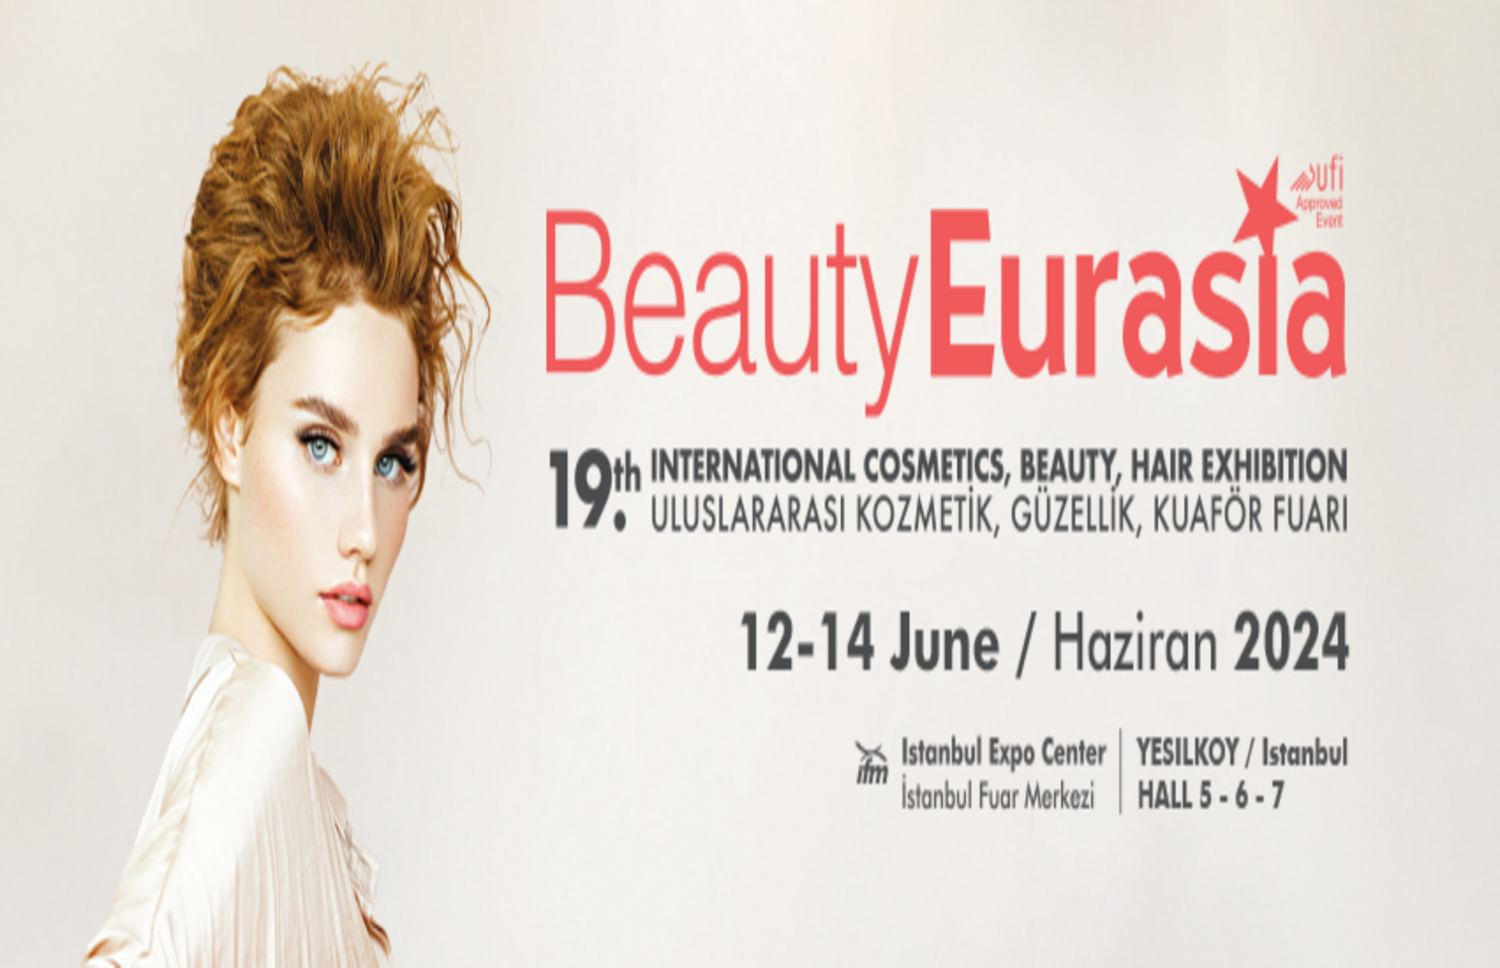 Turkey Beauty Eurasia 2024